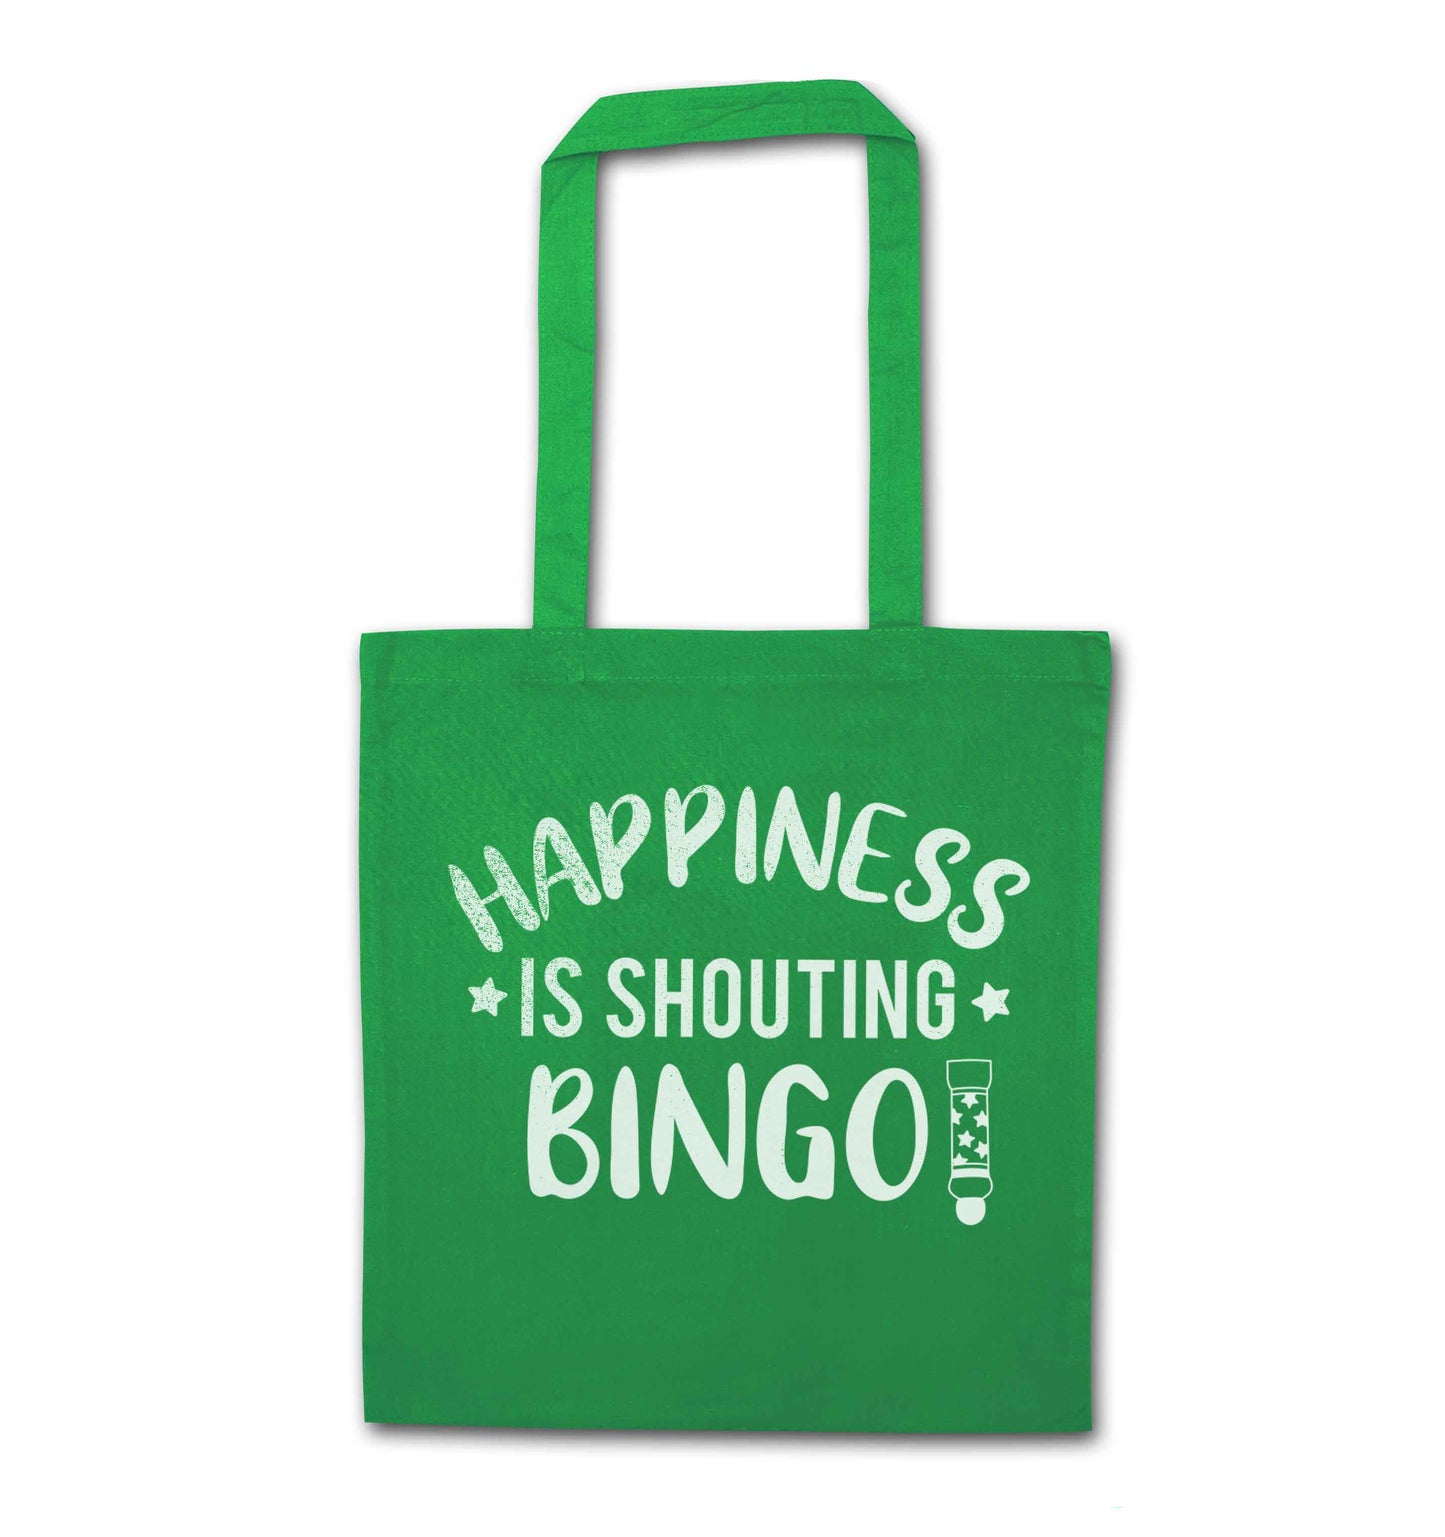 Happiness is shouting bingo! green tote bag